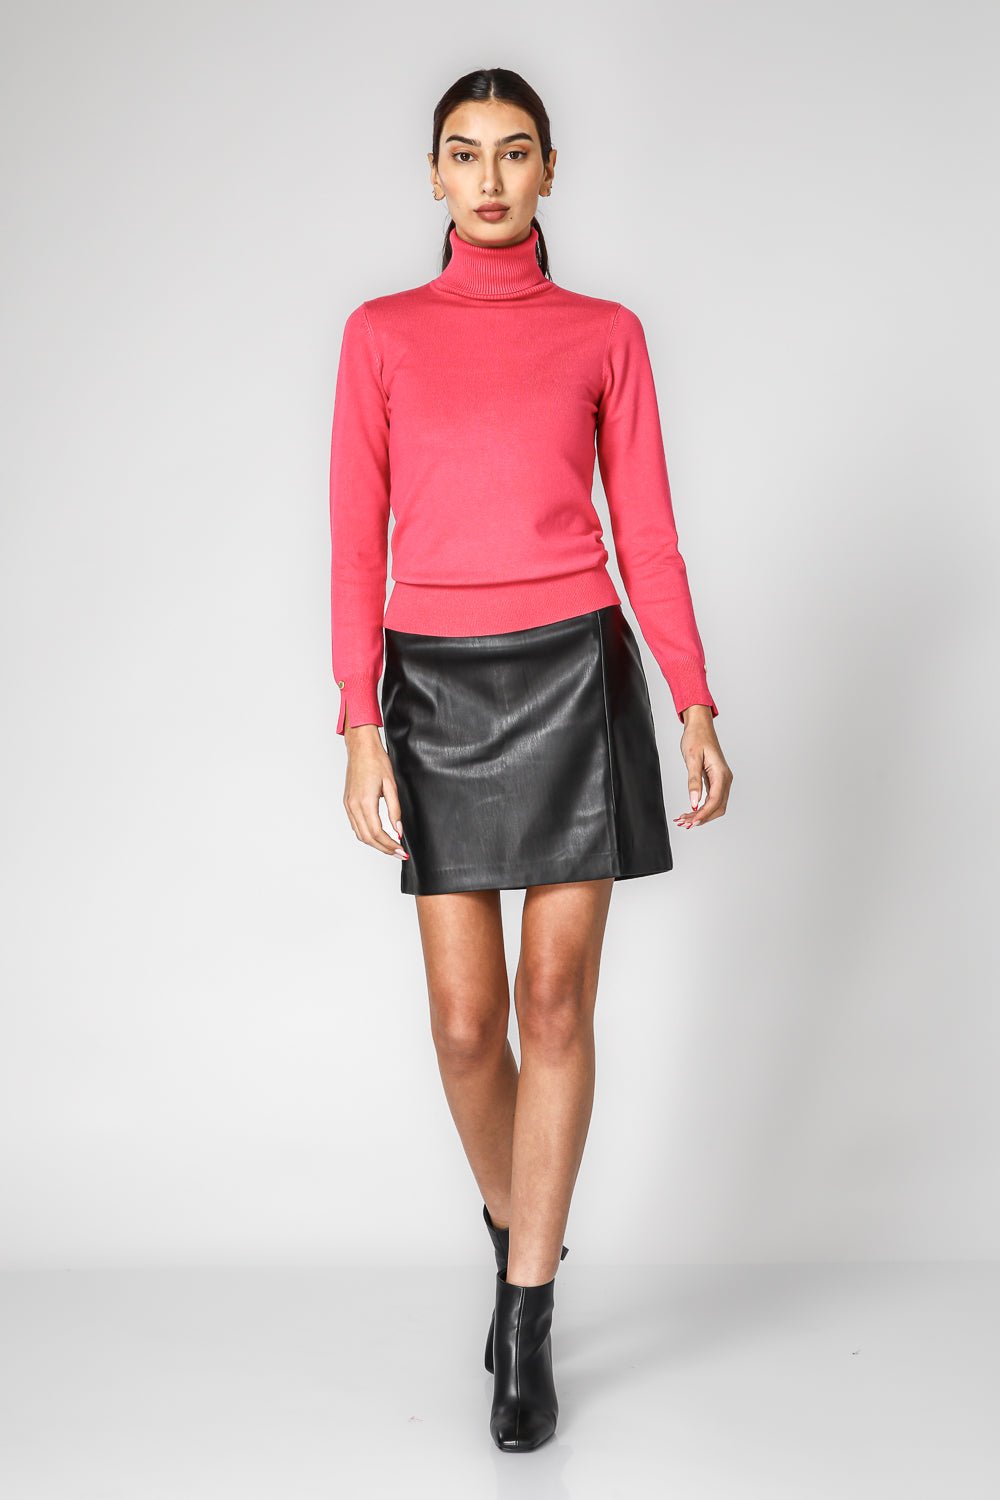 KENNETH COLE - חצאית מיני דמוי עור שחורה - MASHBIR//365